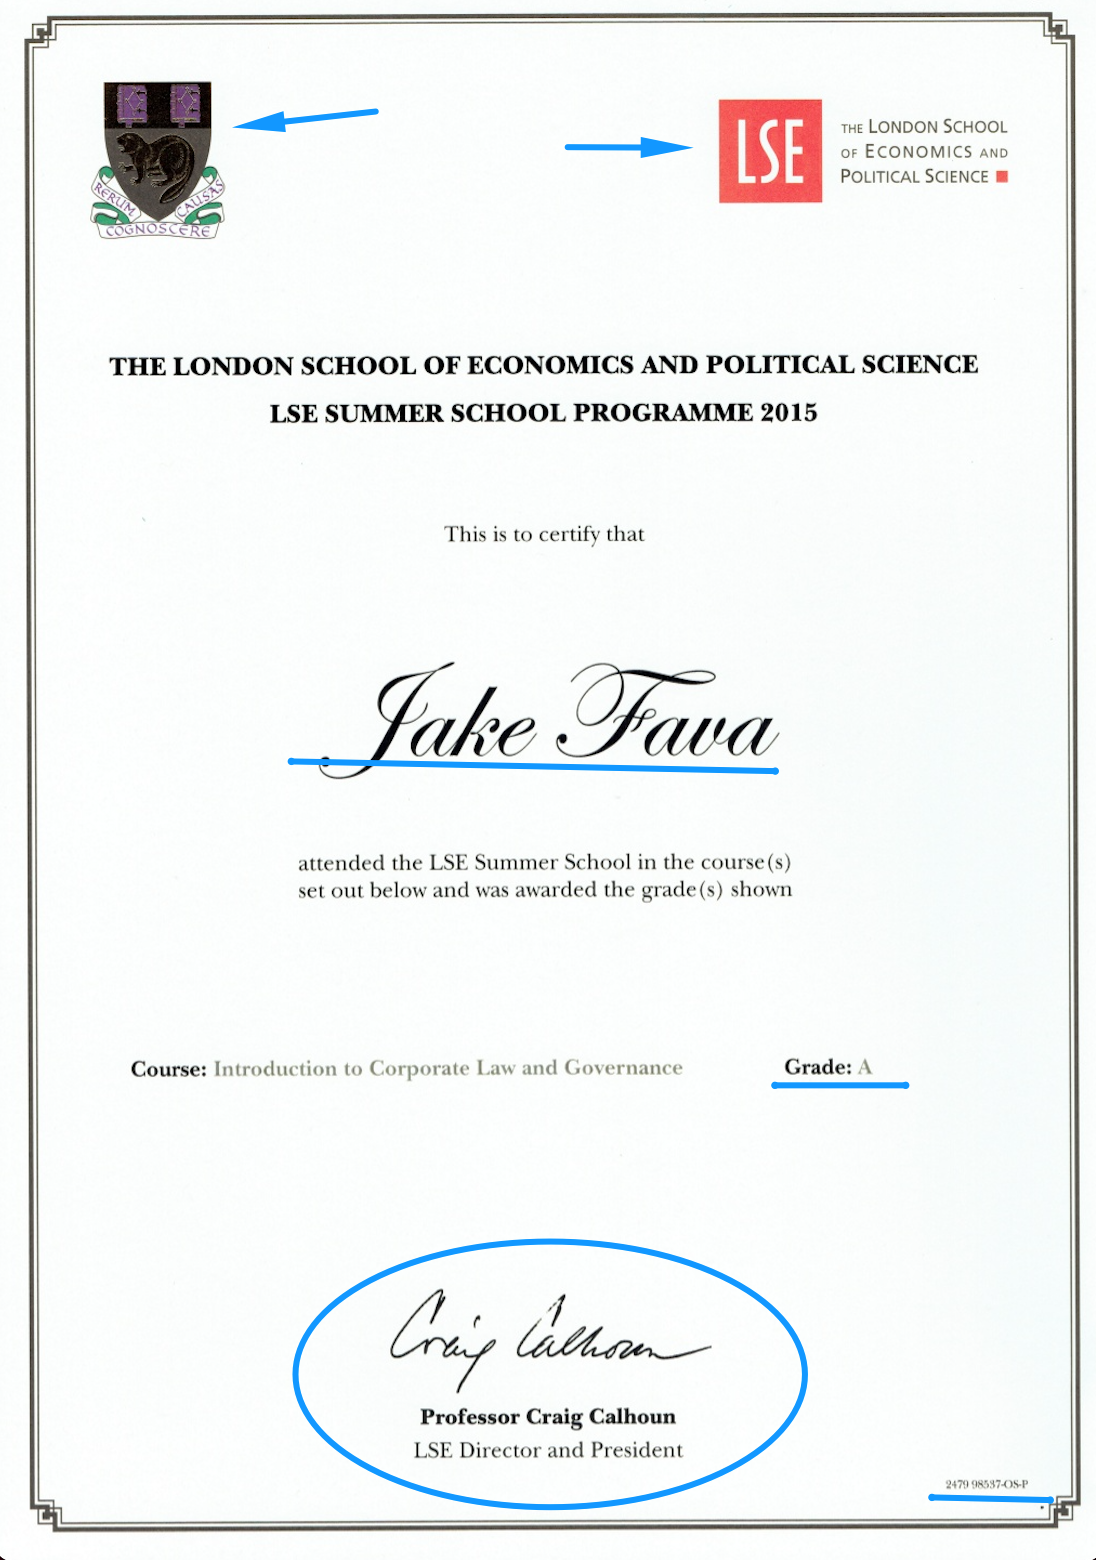  London School of Economics diploma